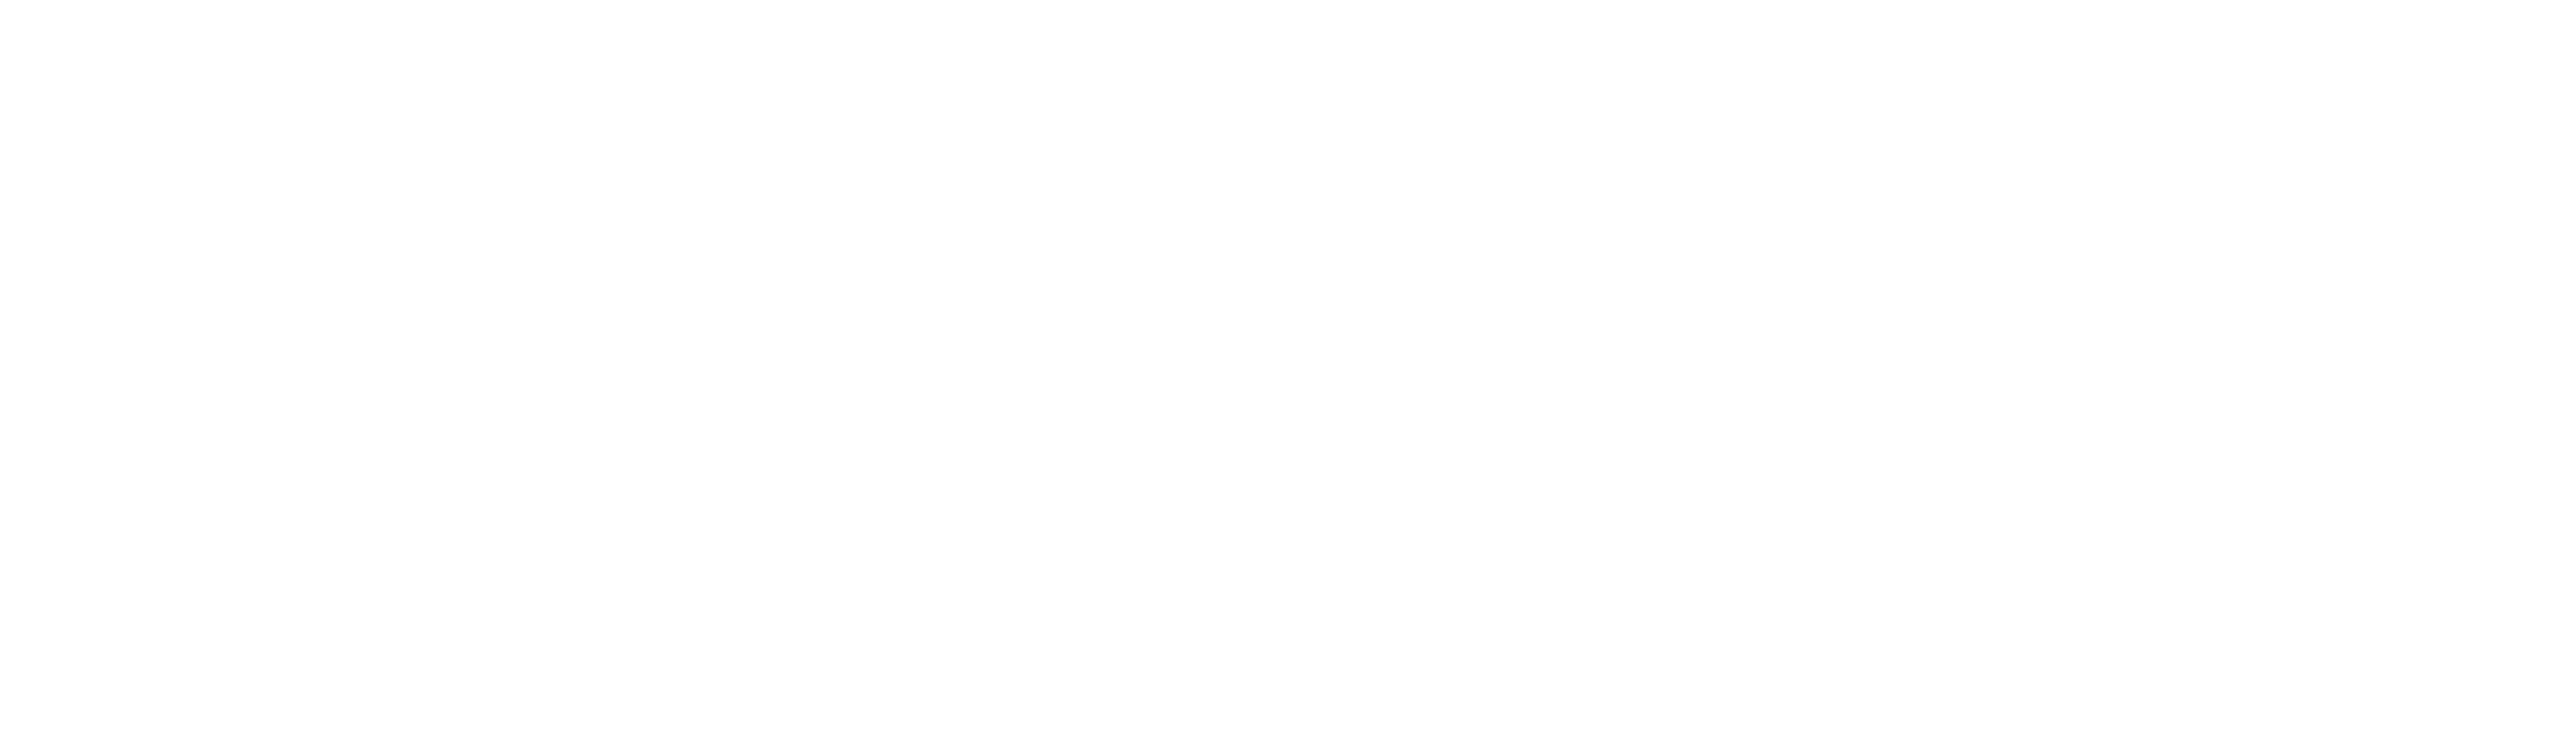 victus vision logo white